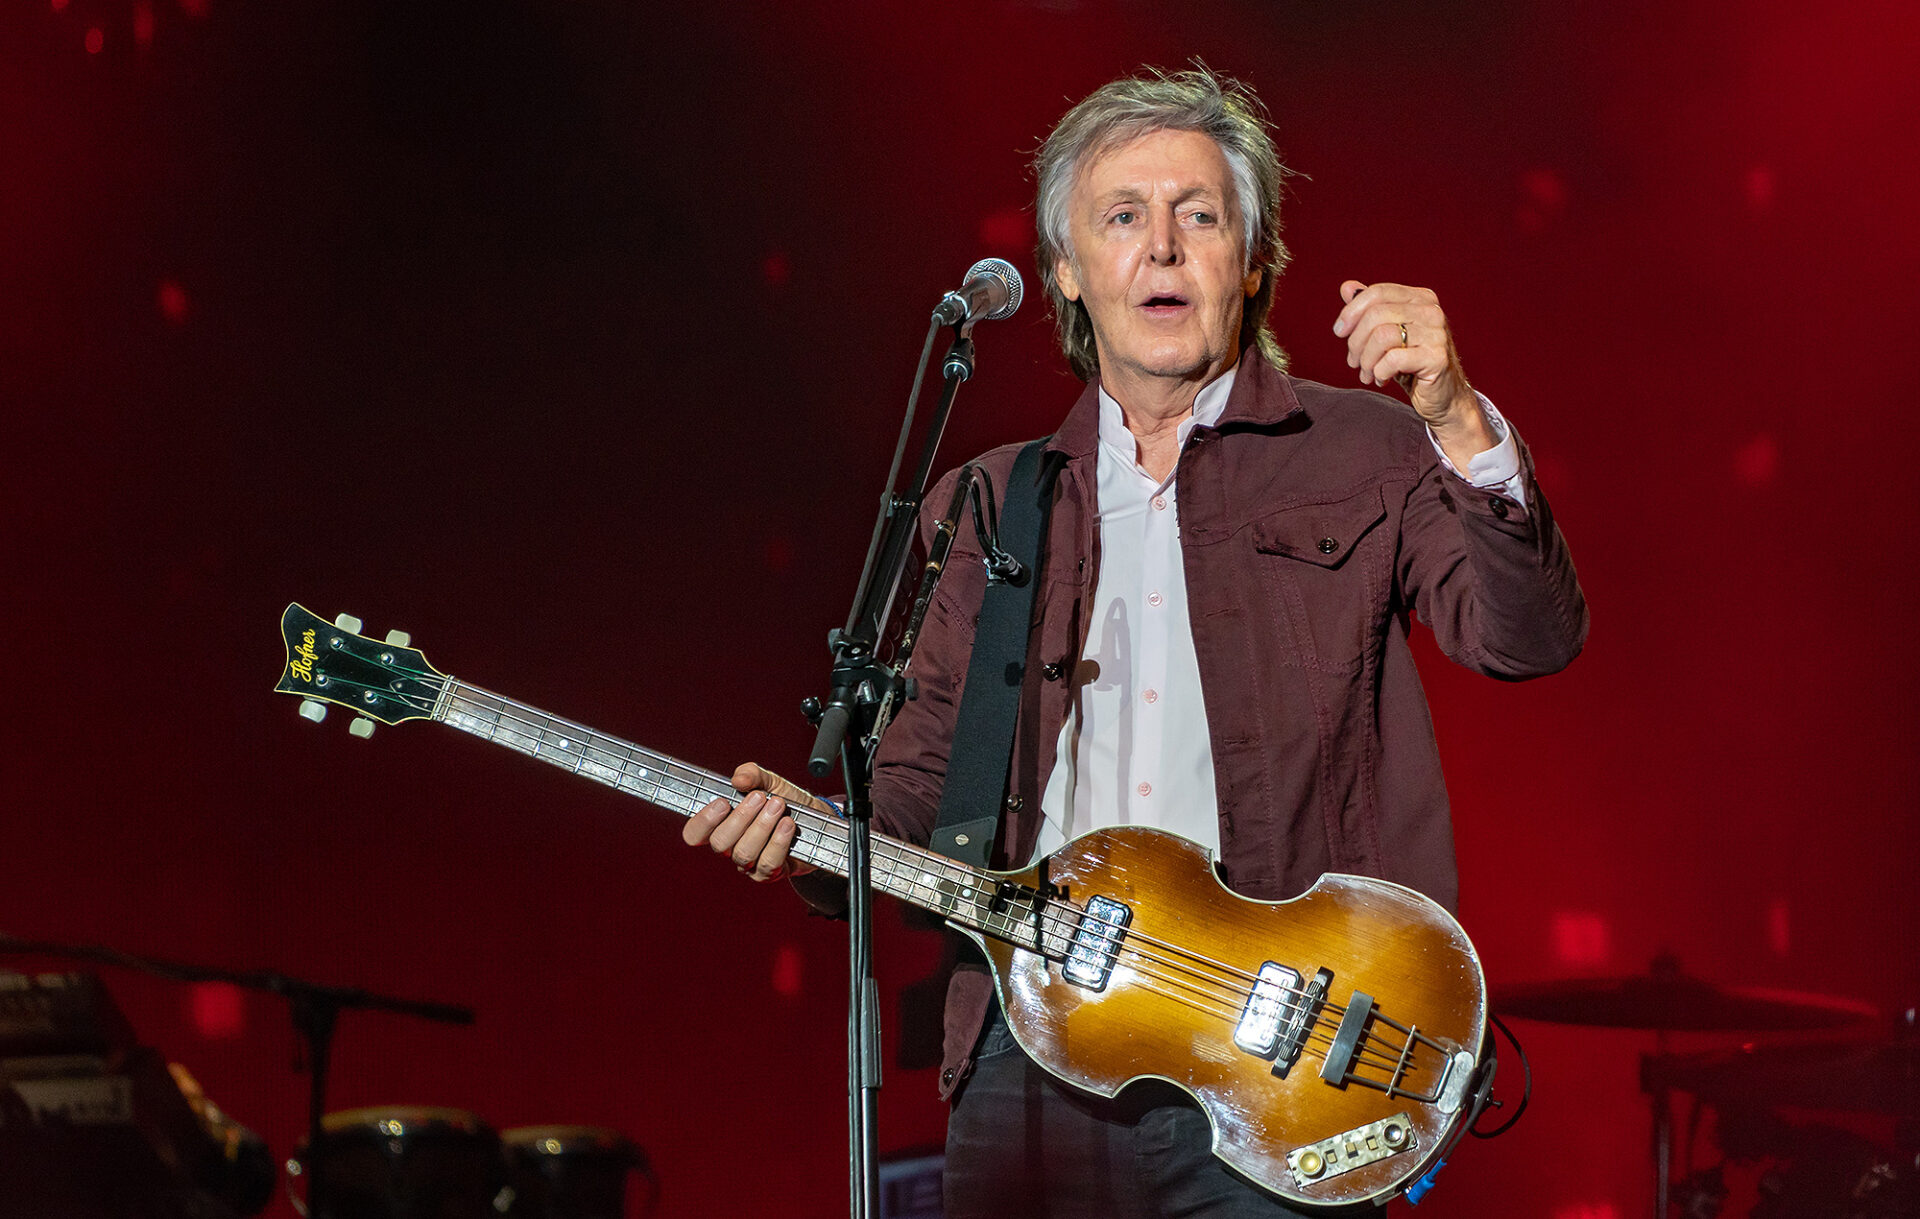 Paul McCartney drops hint about new tour dates